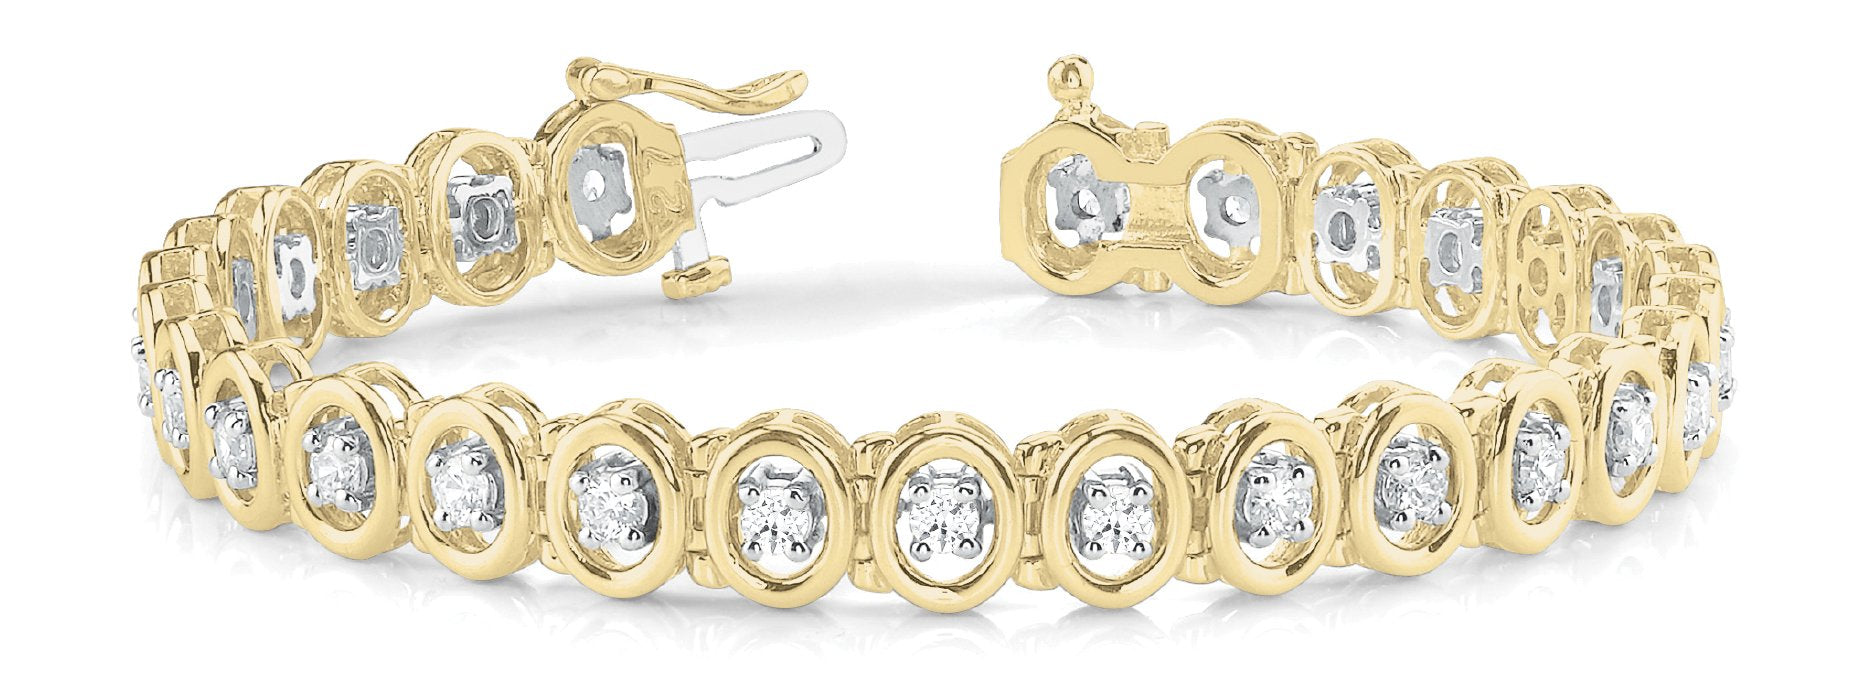 Fancy Diamond Bracelet Ladies 3.04ct tw - 14kt Gold